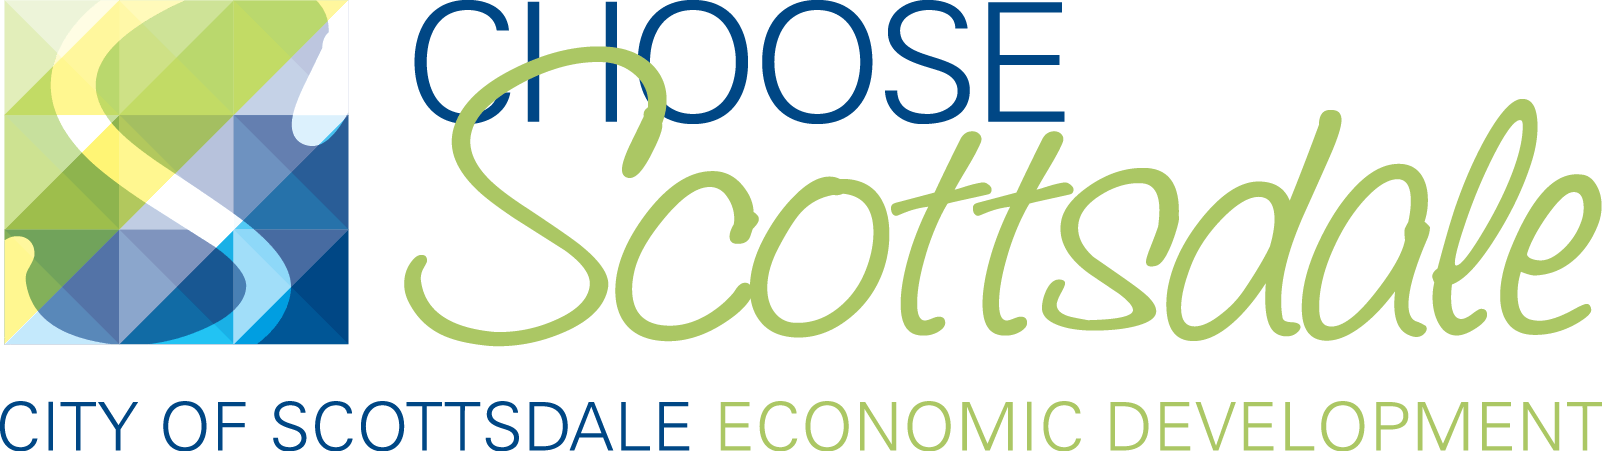 Scottsdale Logo - Home - Choose Scottsdale Economic Development